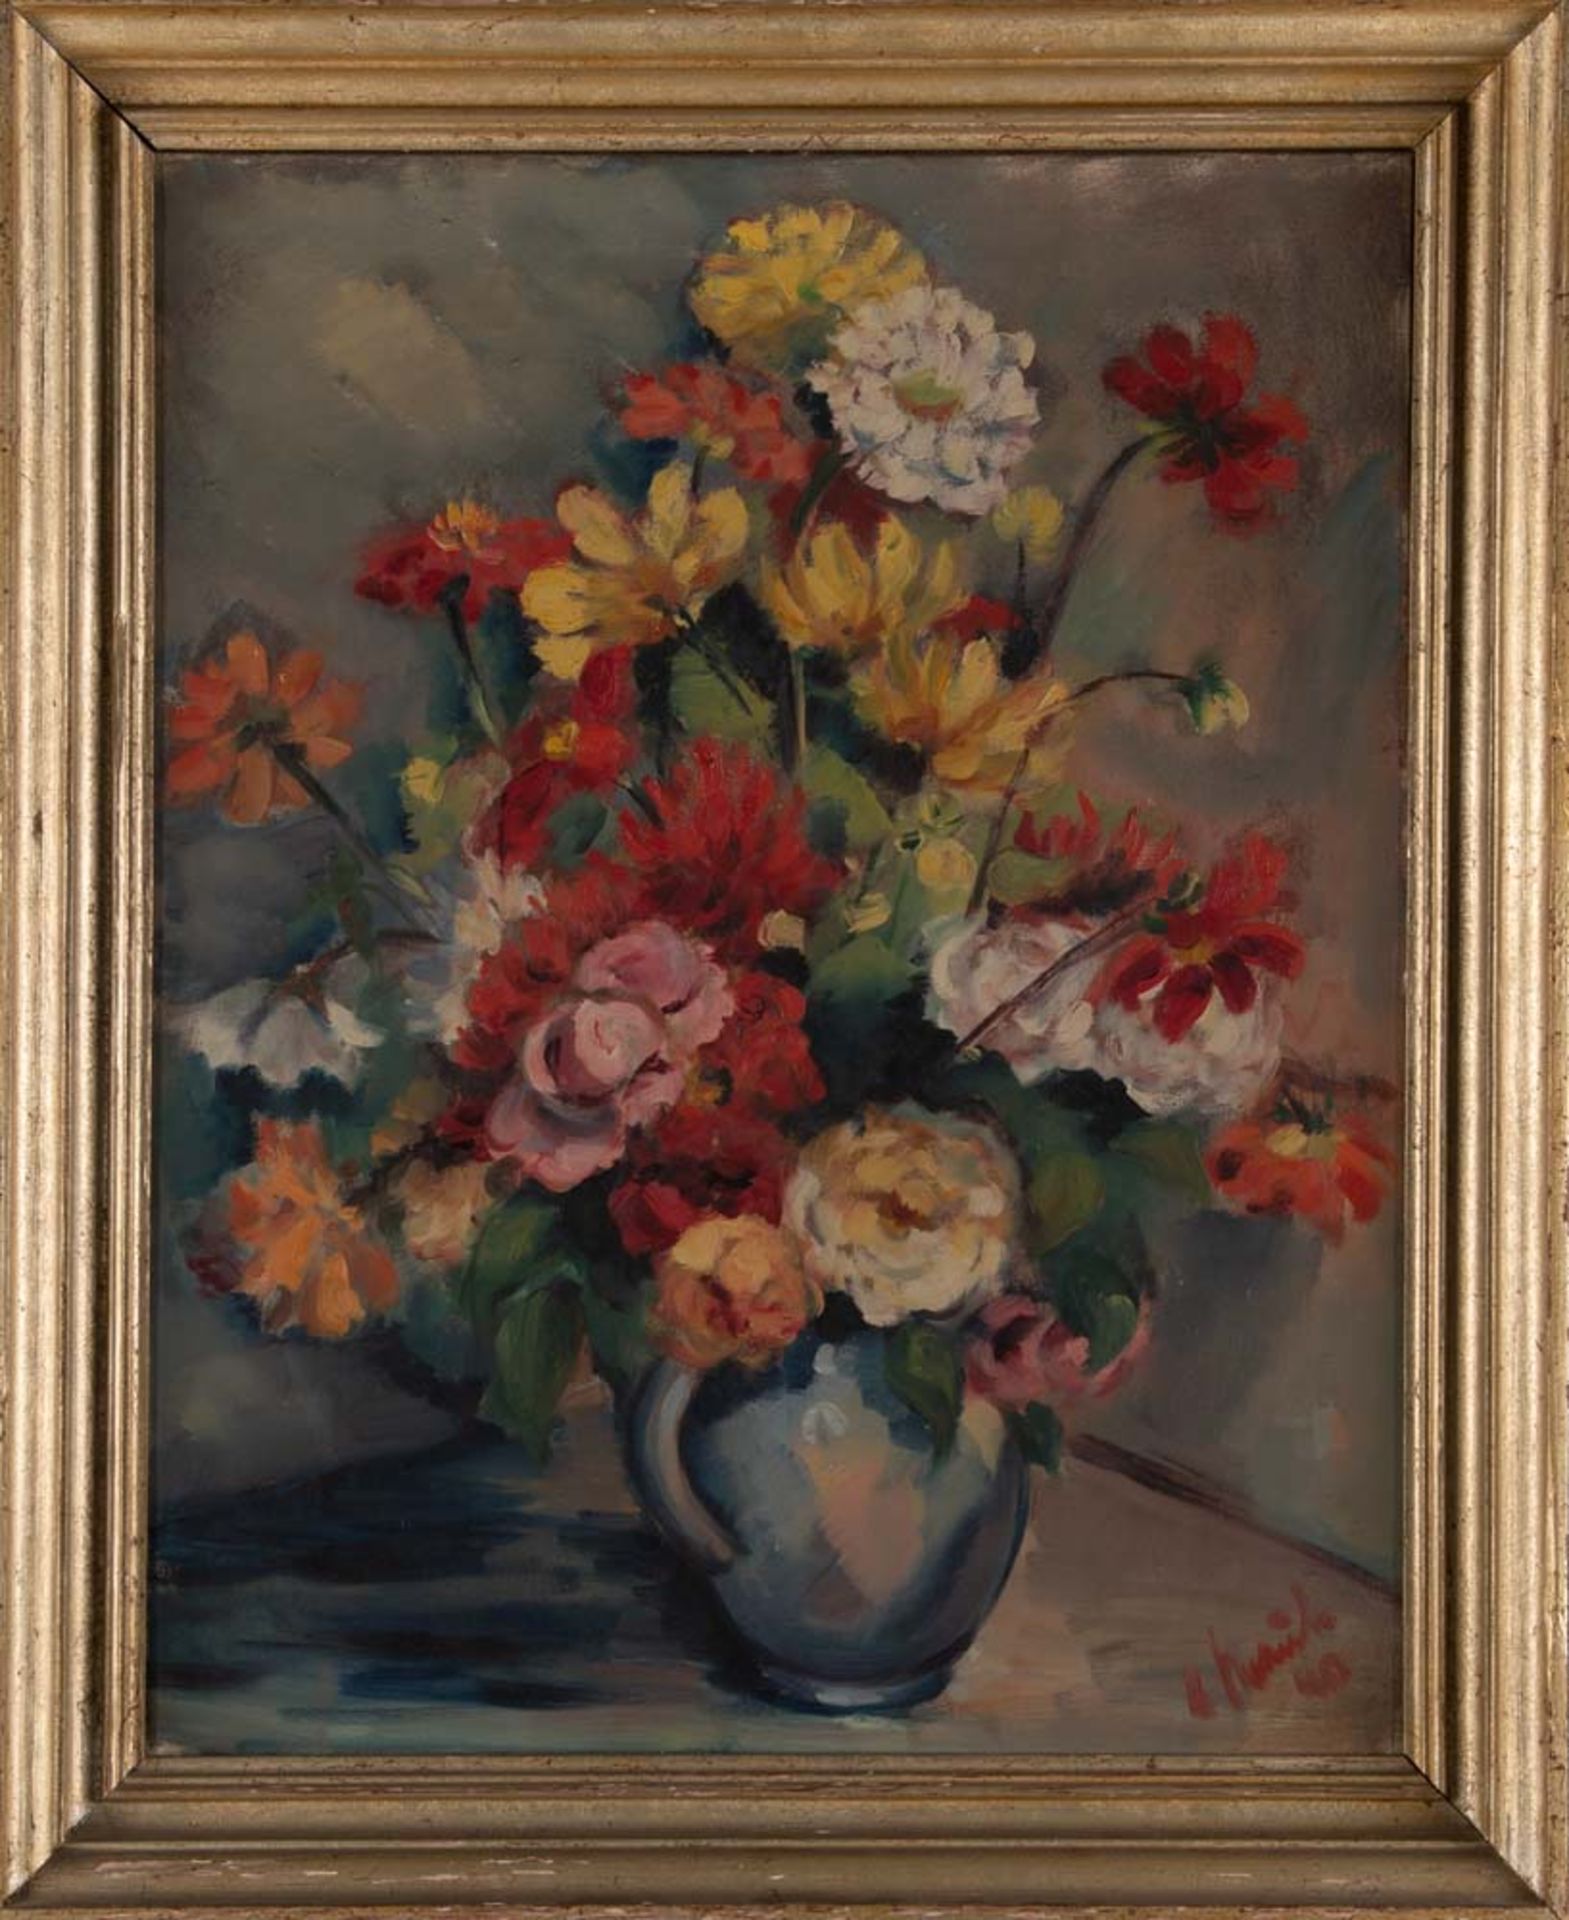 John Maul (1917-1998) attrb. Blumenstrauß in Vase. Öl/Lw., re./u./sign./dat. (19)40, gerahmt, 70 x